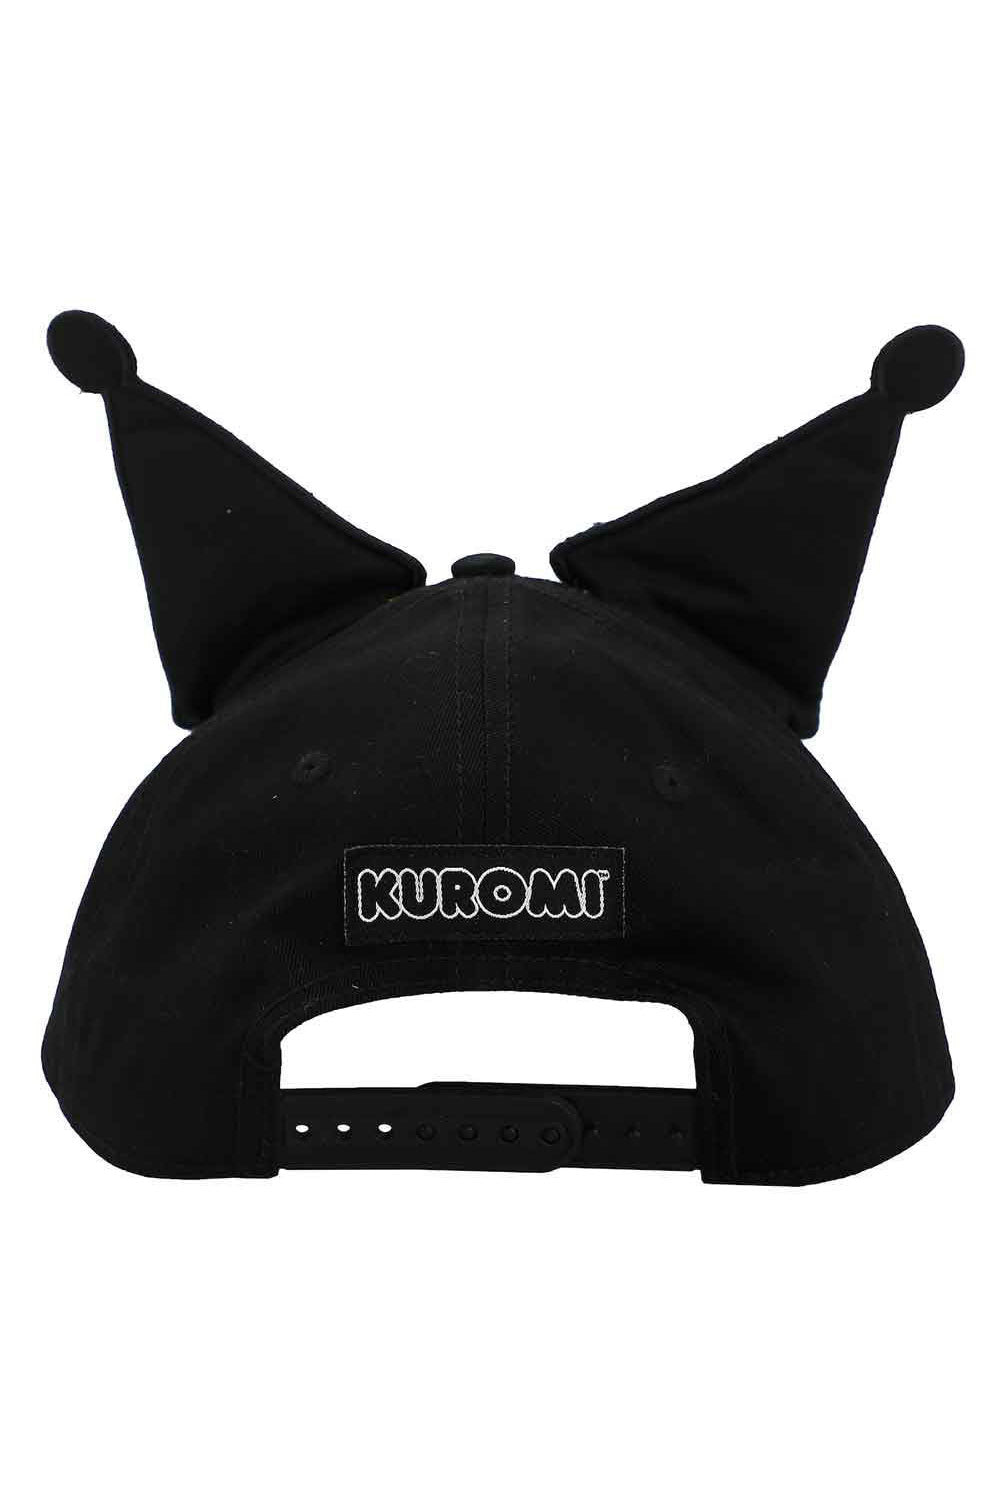 hello kitty kuromi goth hat